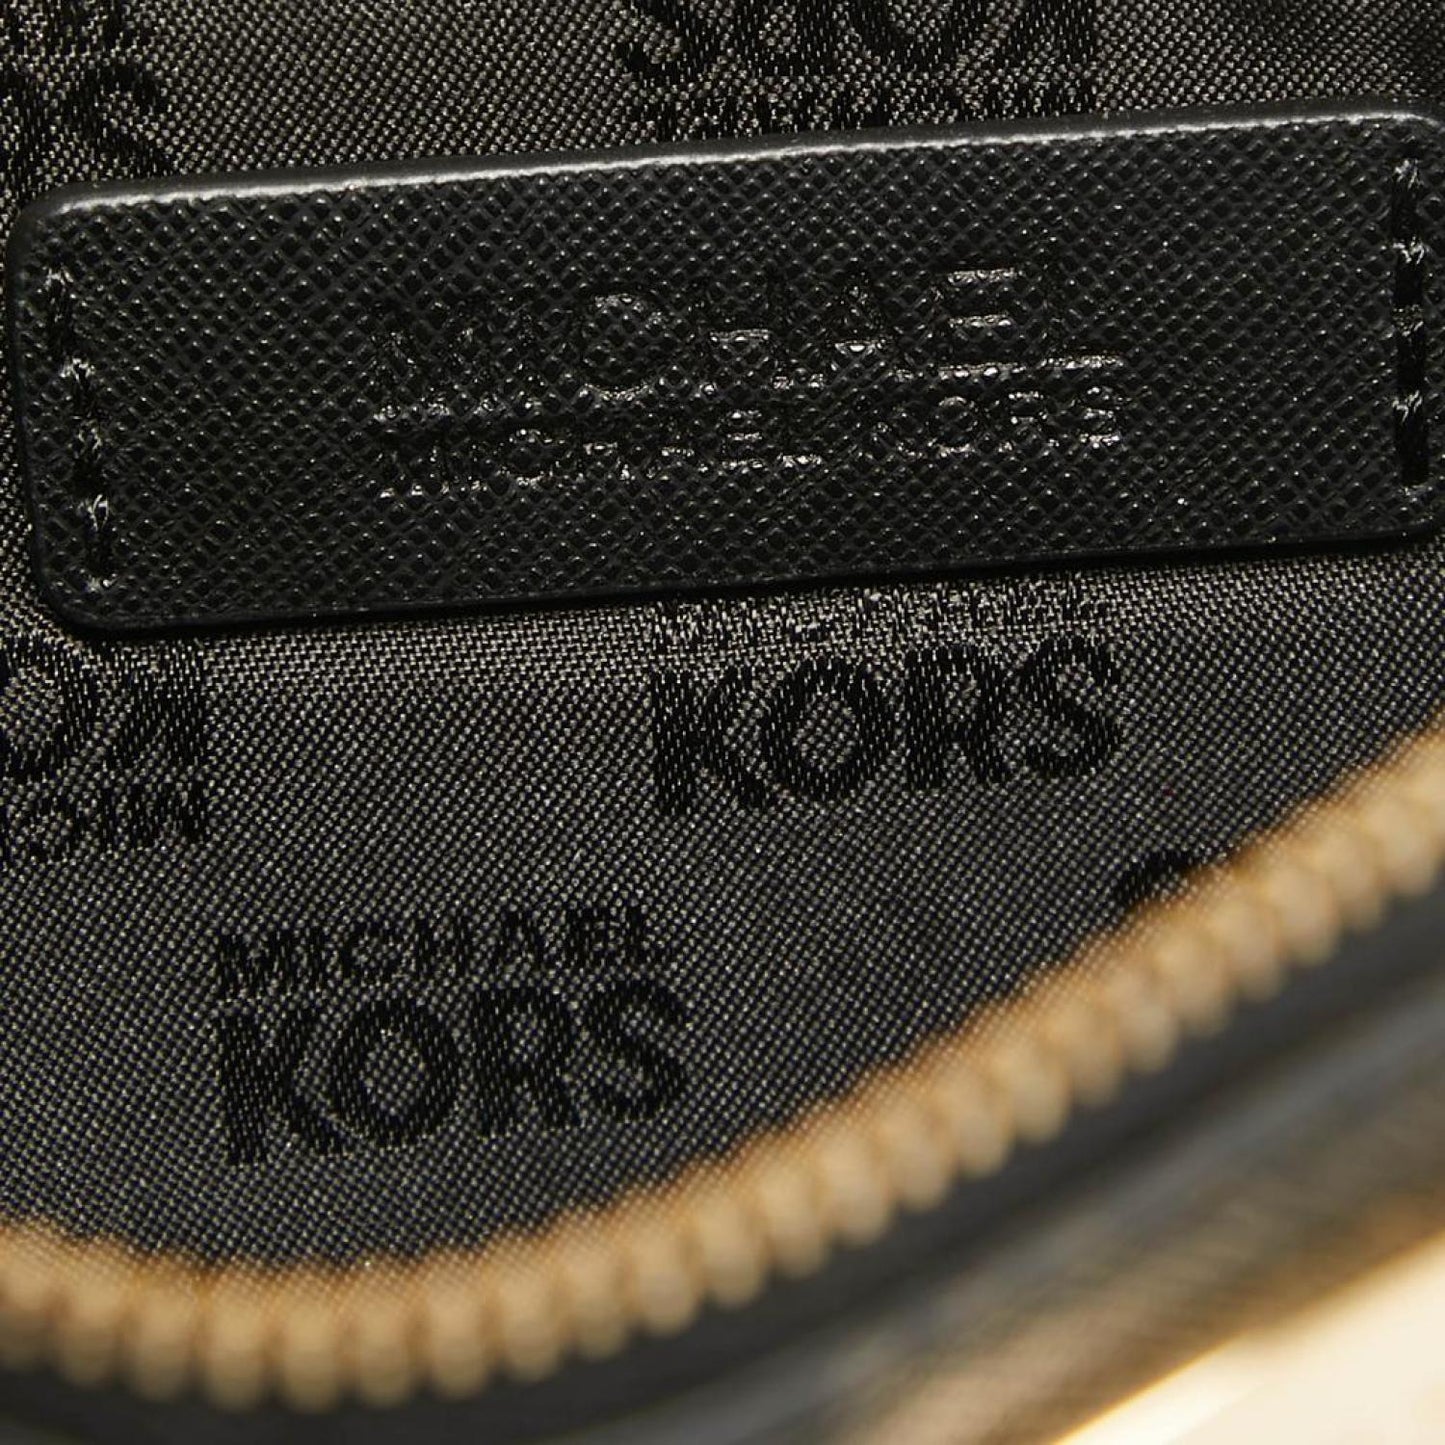 Michael Michael Kors  Leather Studded Logo Wristlet Pouch